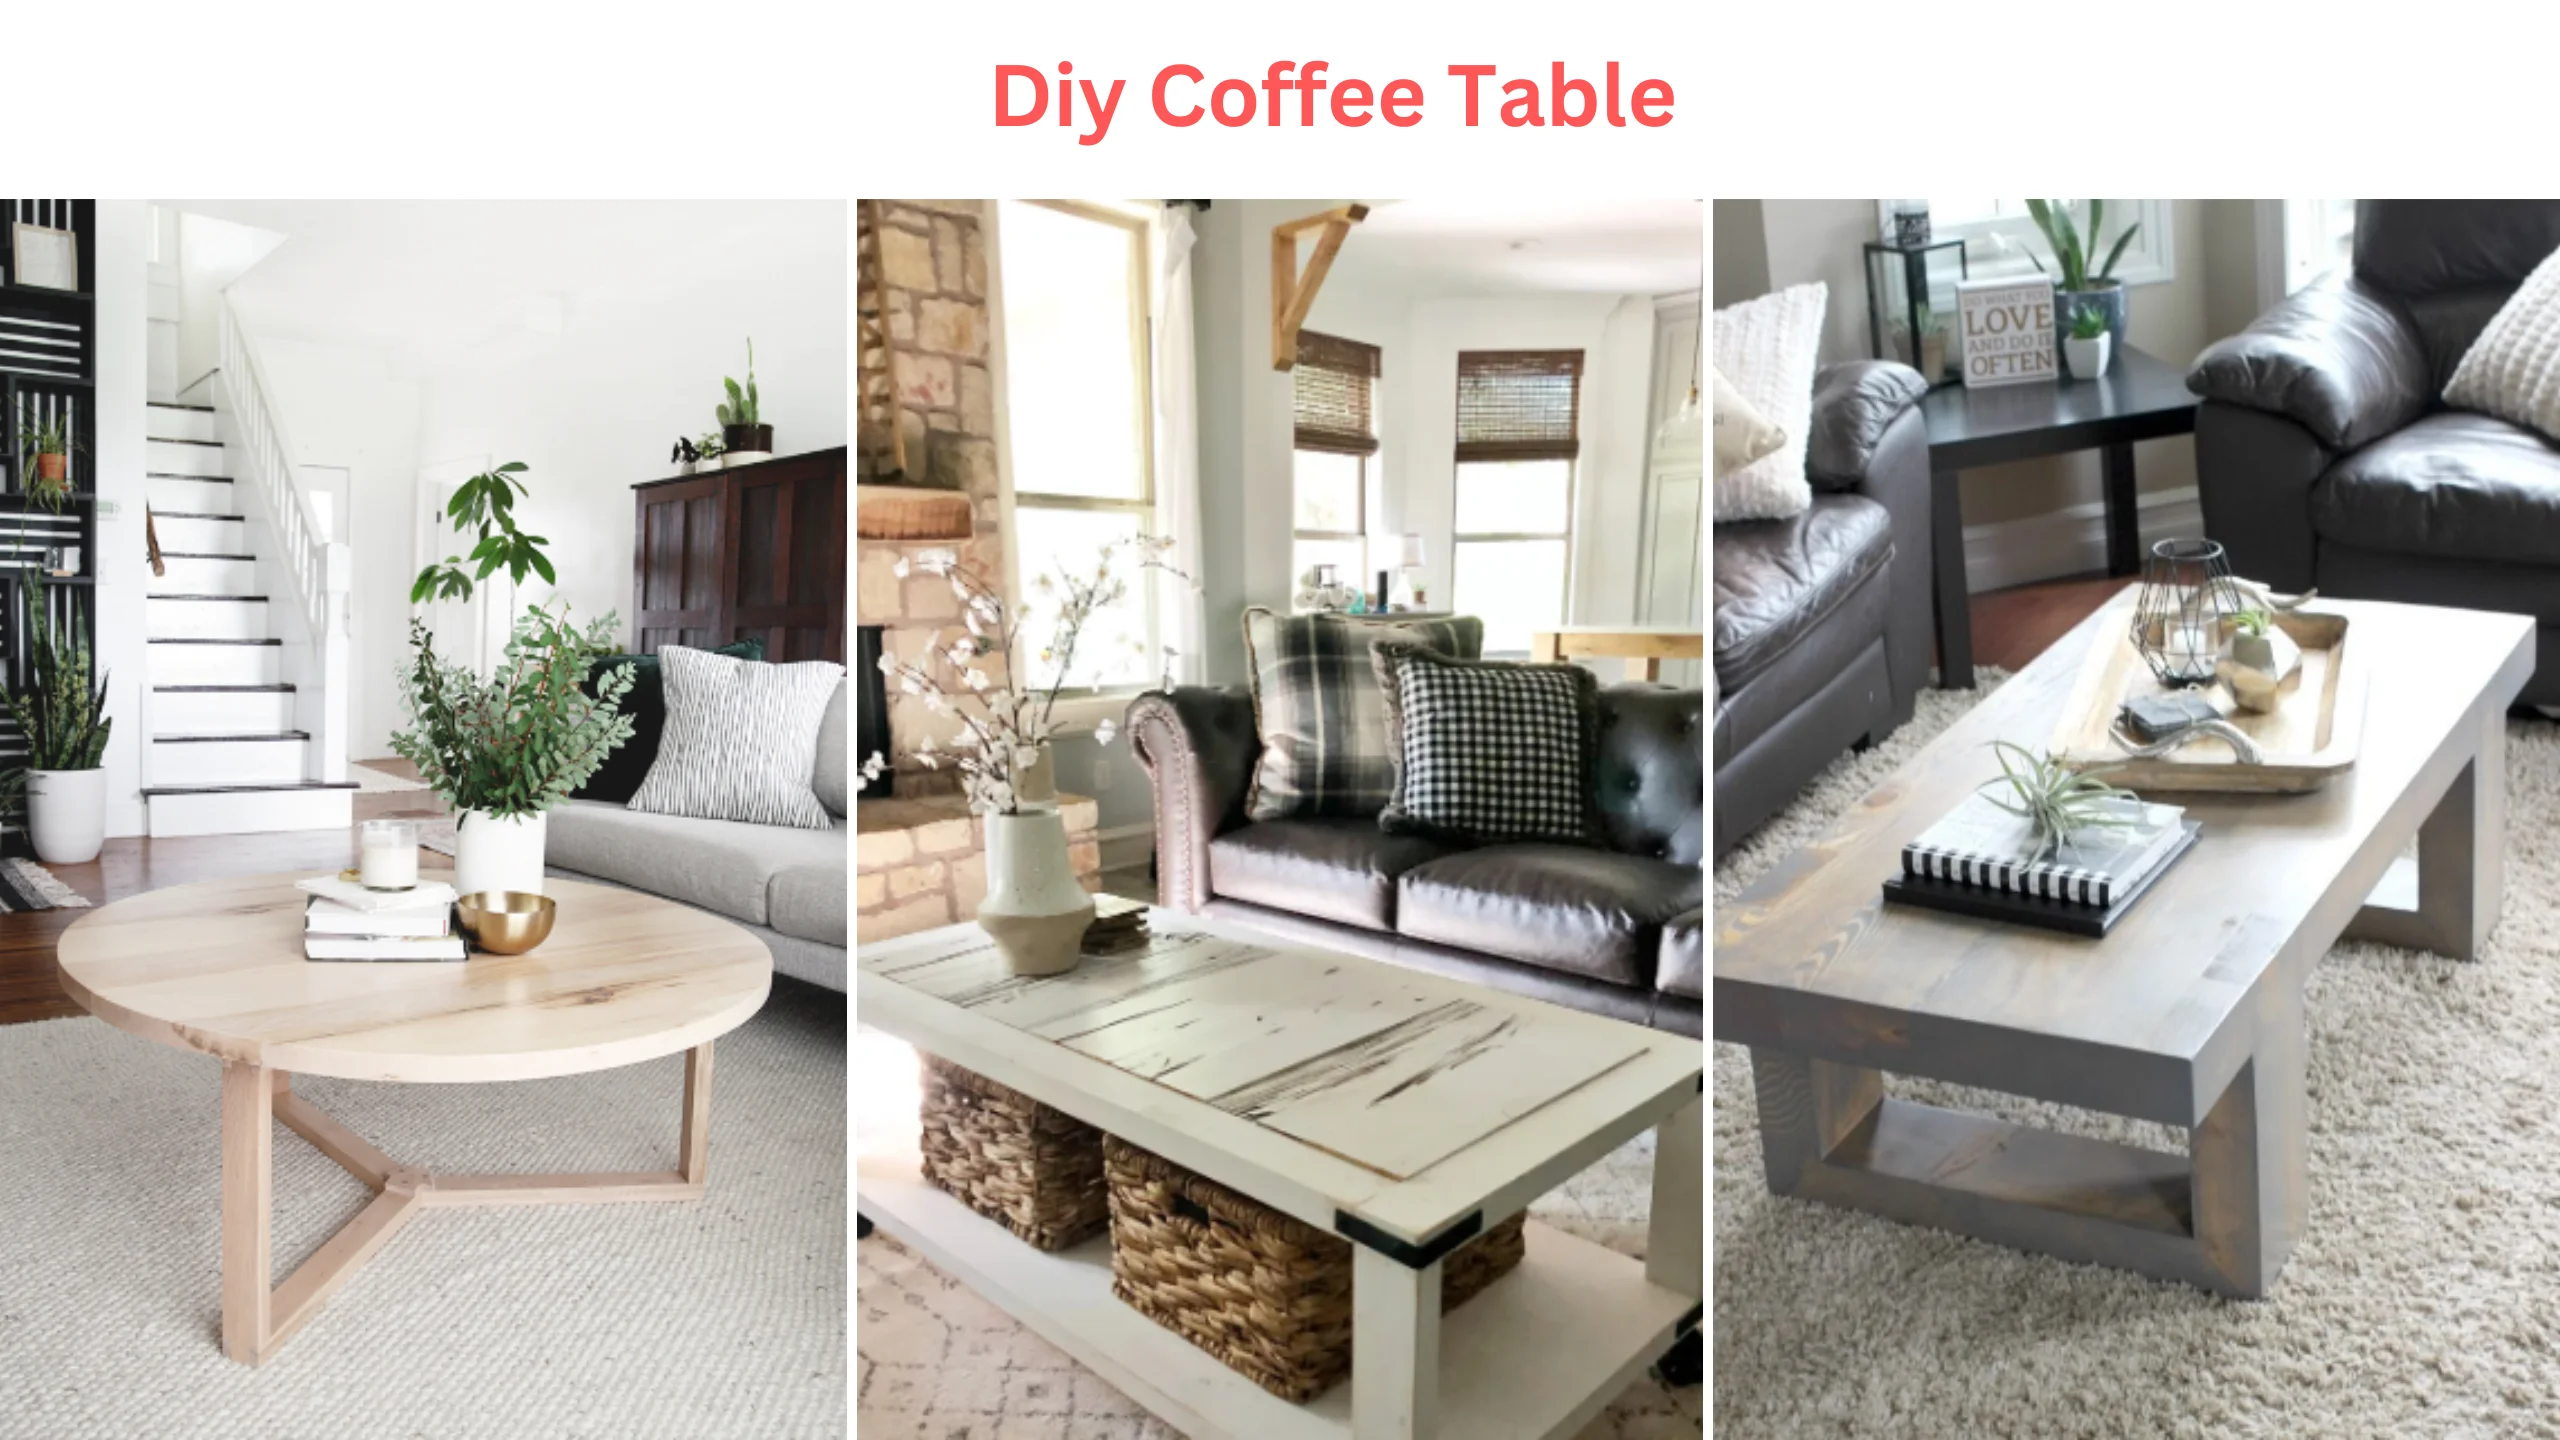 Diy coffee table (2)